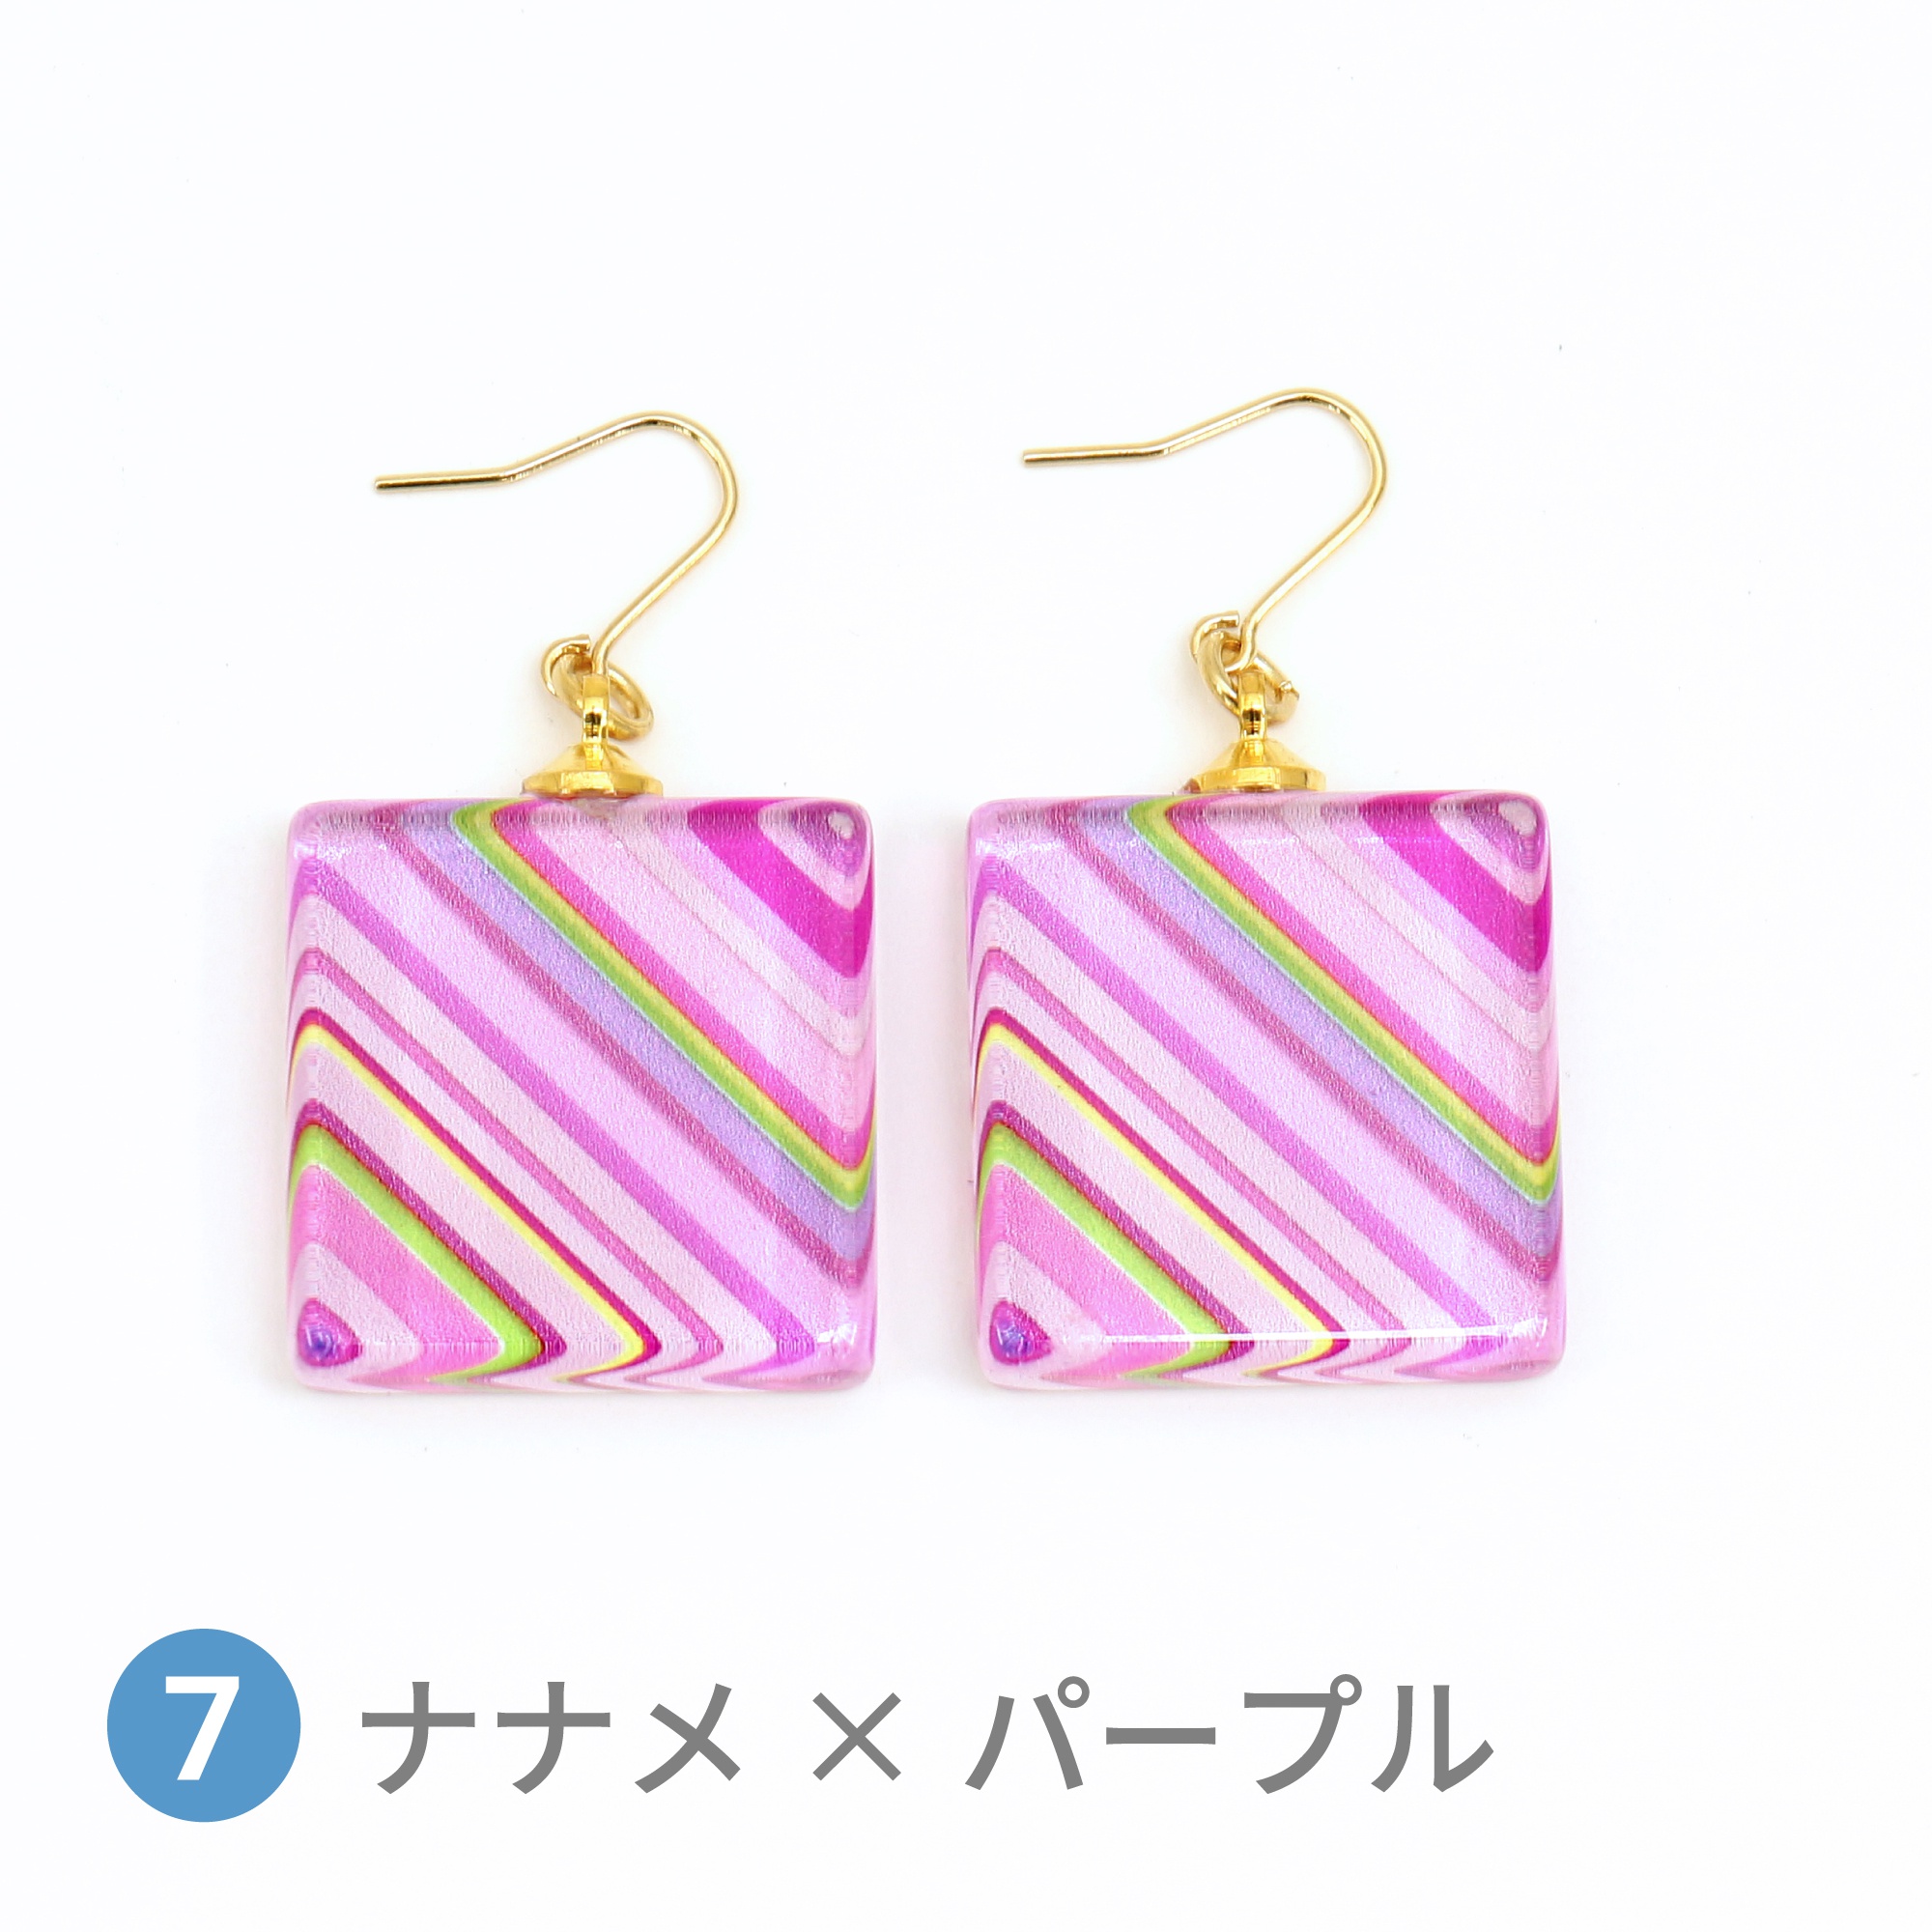 Glass accessories Pierced Earring SPEED diagonal&purple square shape